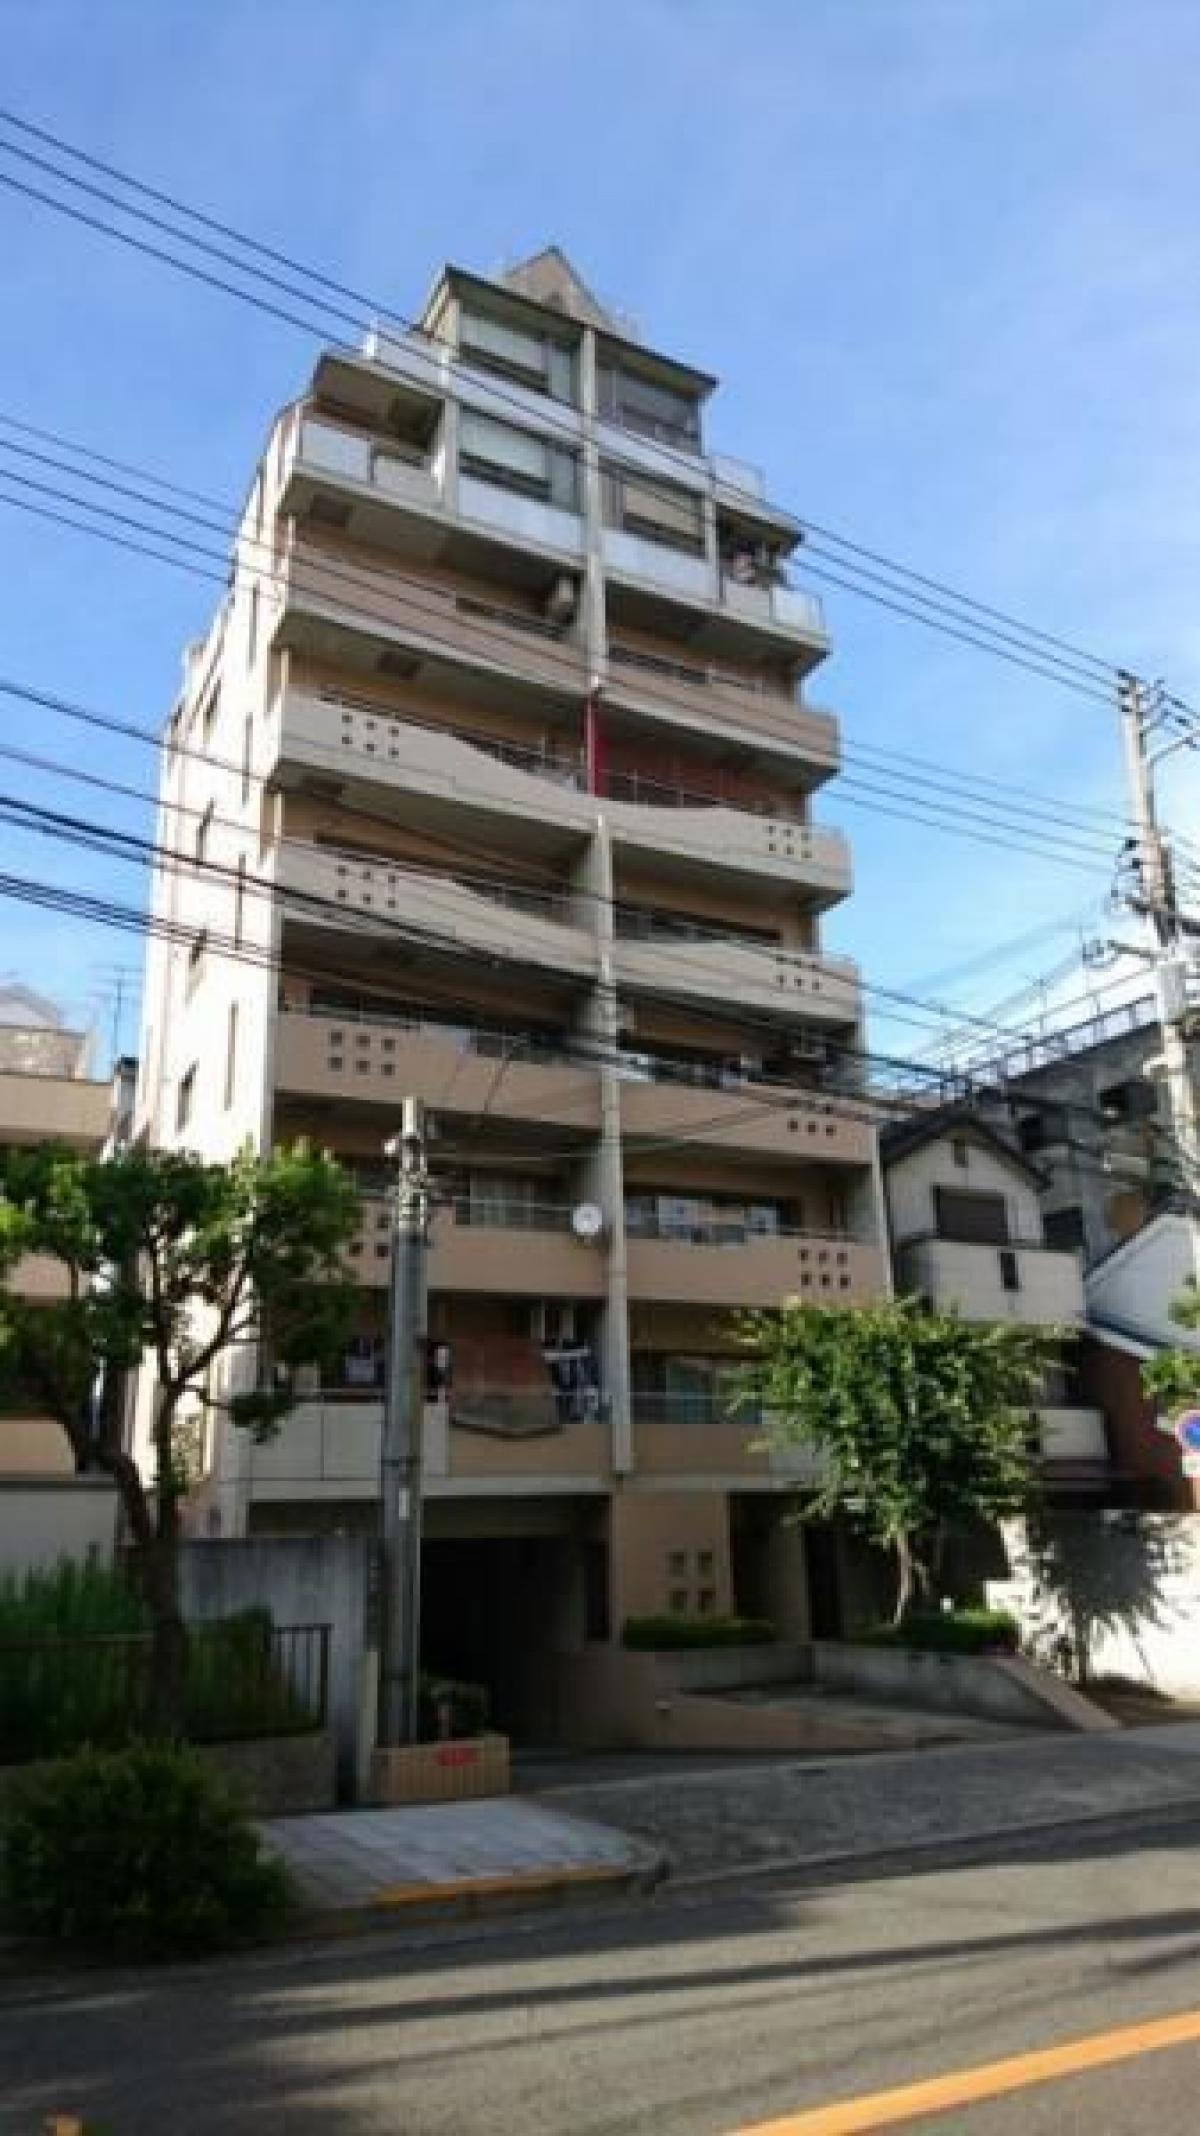 Picture of Apartment For Sale in Osaka Shi Tennoji Ku, Osaka, Japan